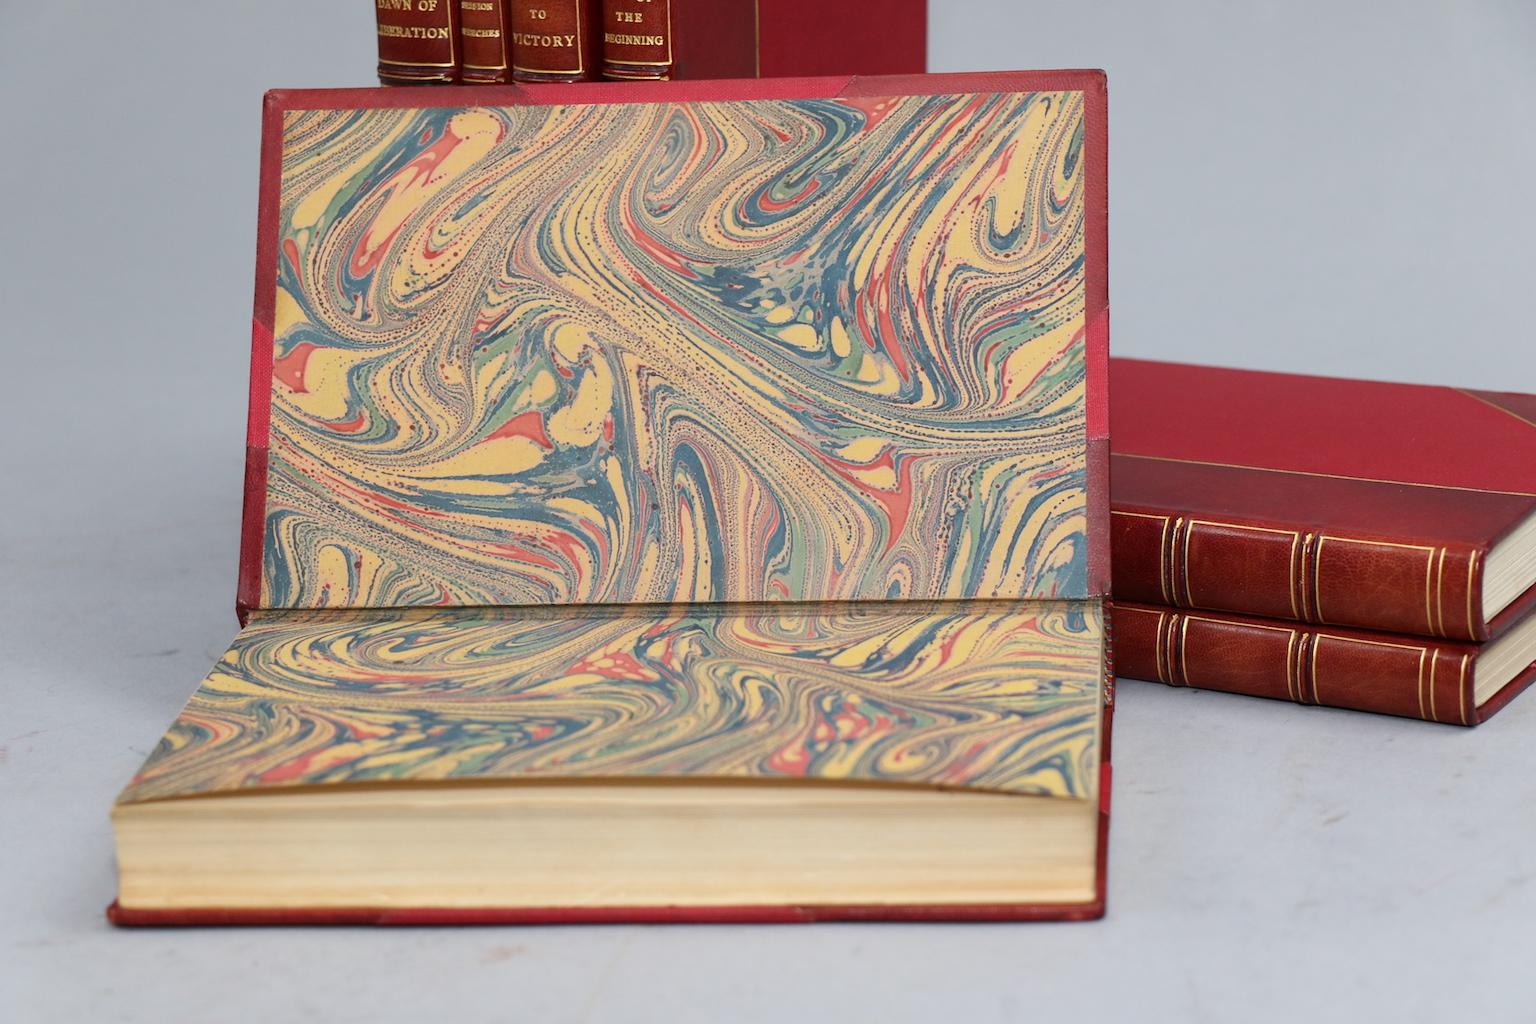 Dyed Books, Sir Winston Spencer Churchill's 